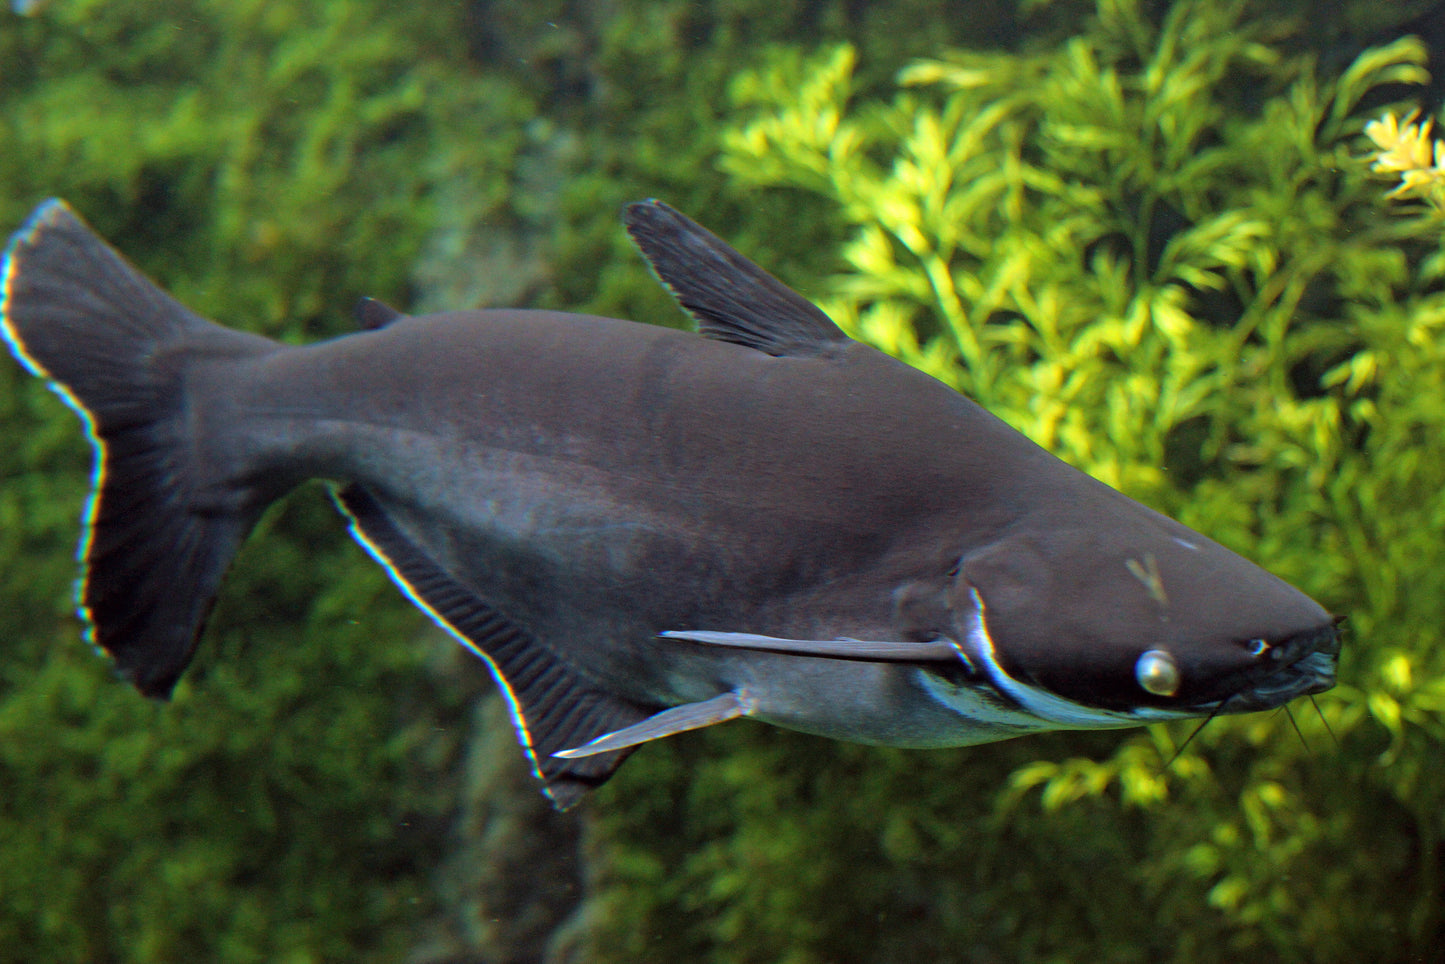 Pangasianodon hypophthalmus (Iridescent Shark)